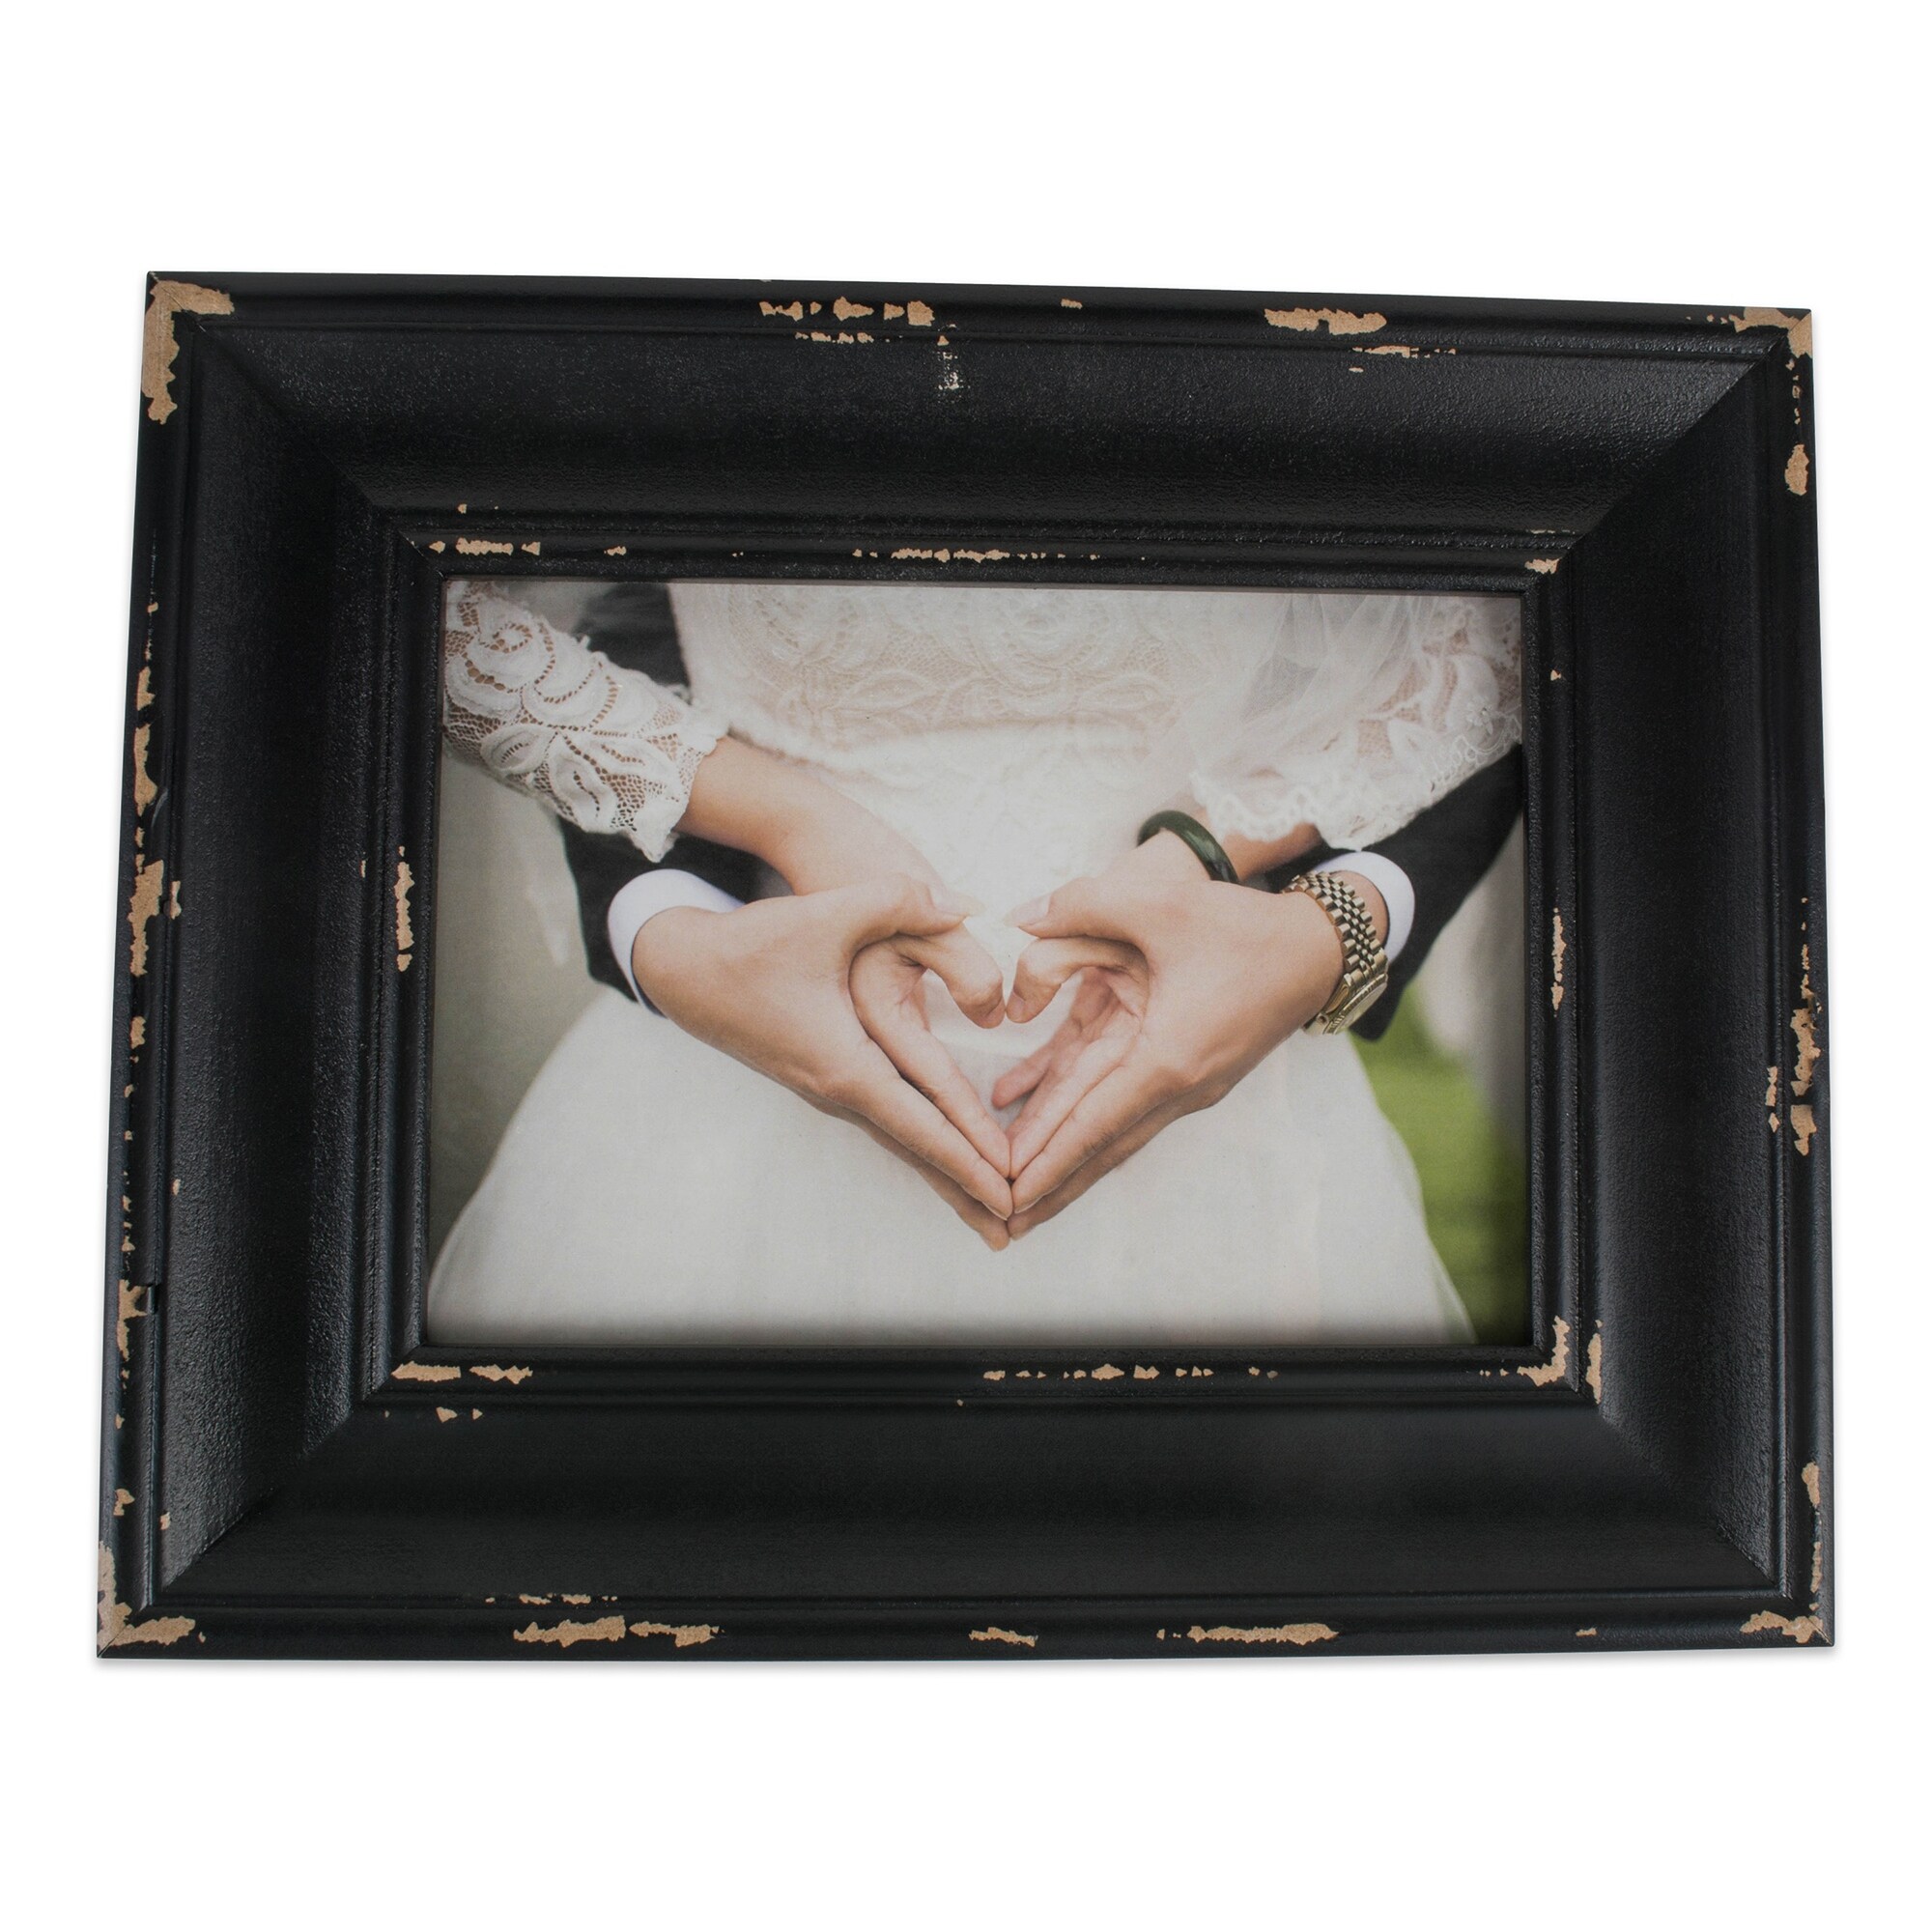 Steinway Black Photo Frame 11 x 11-inch - Bed Bath & Beyond - 10098135